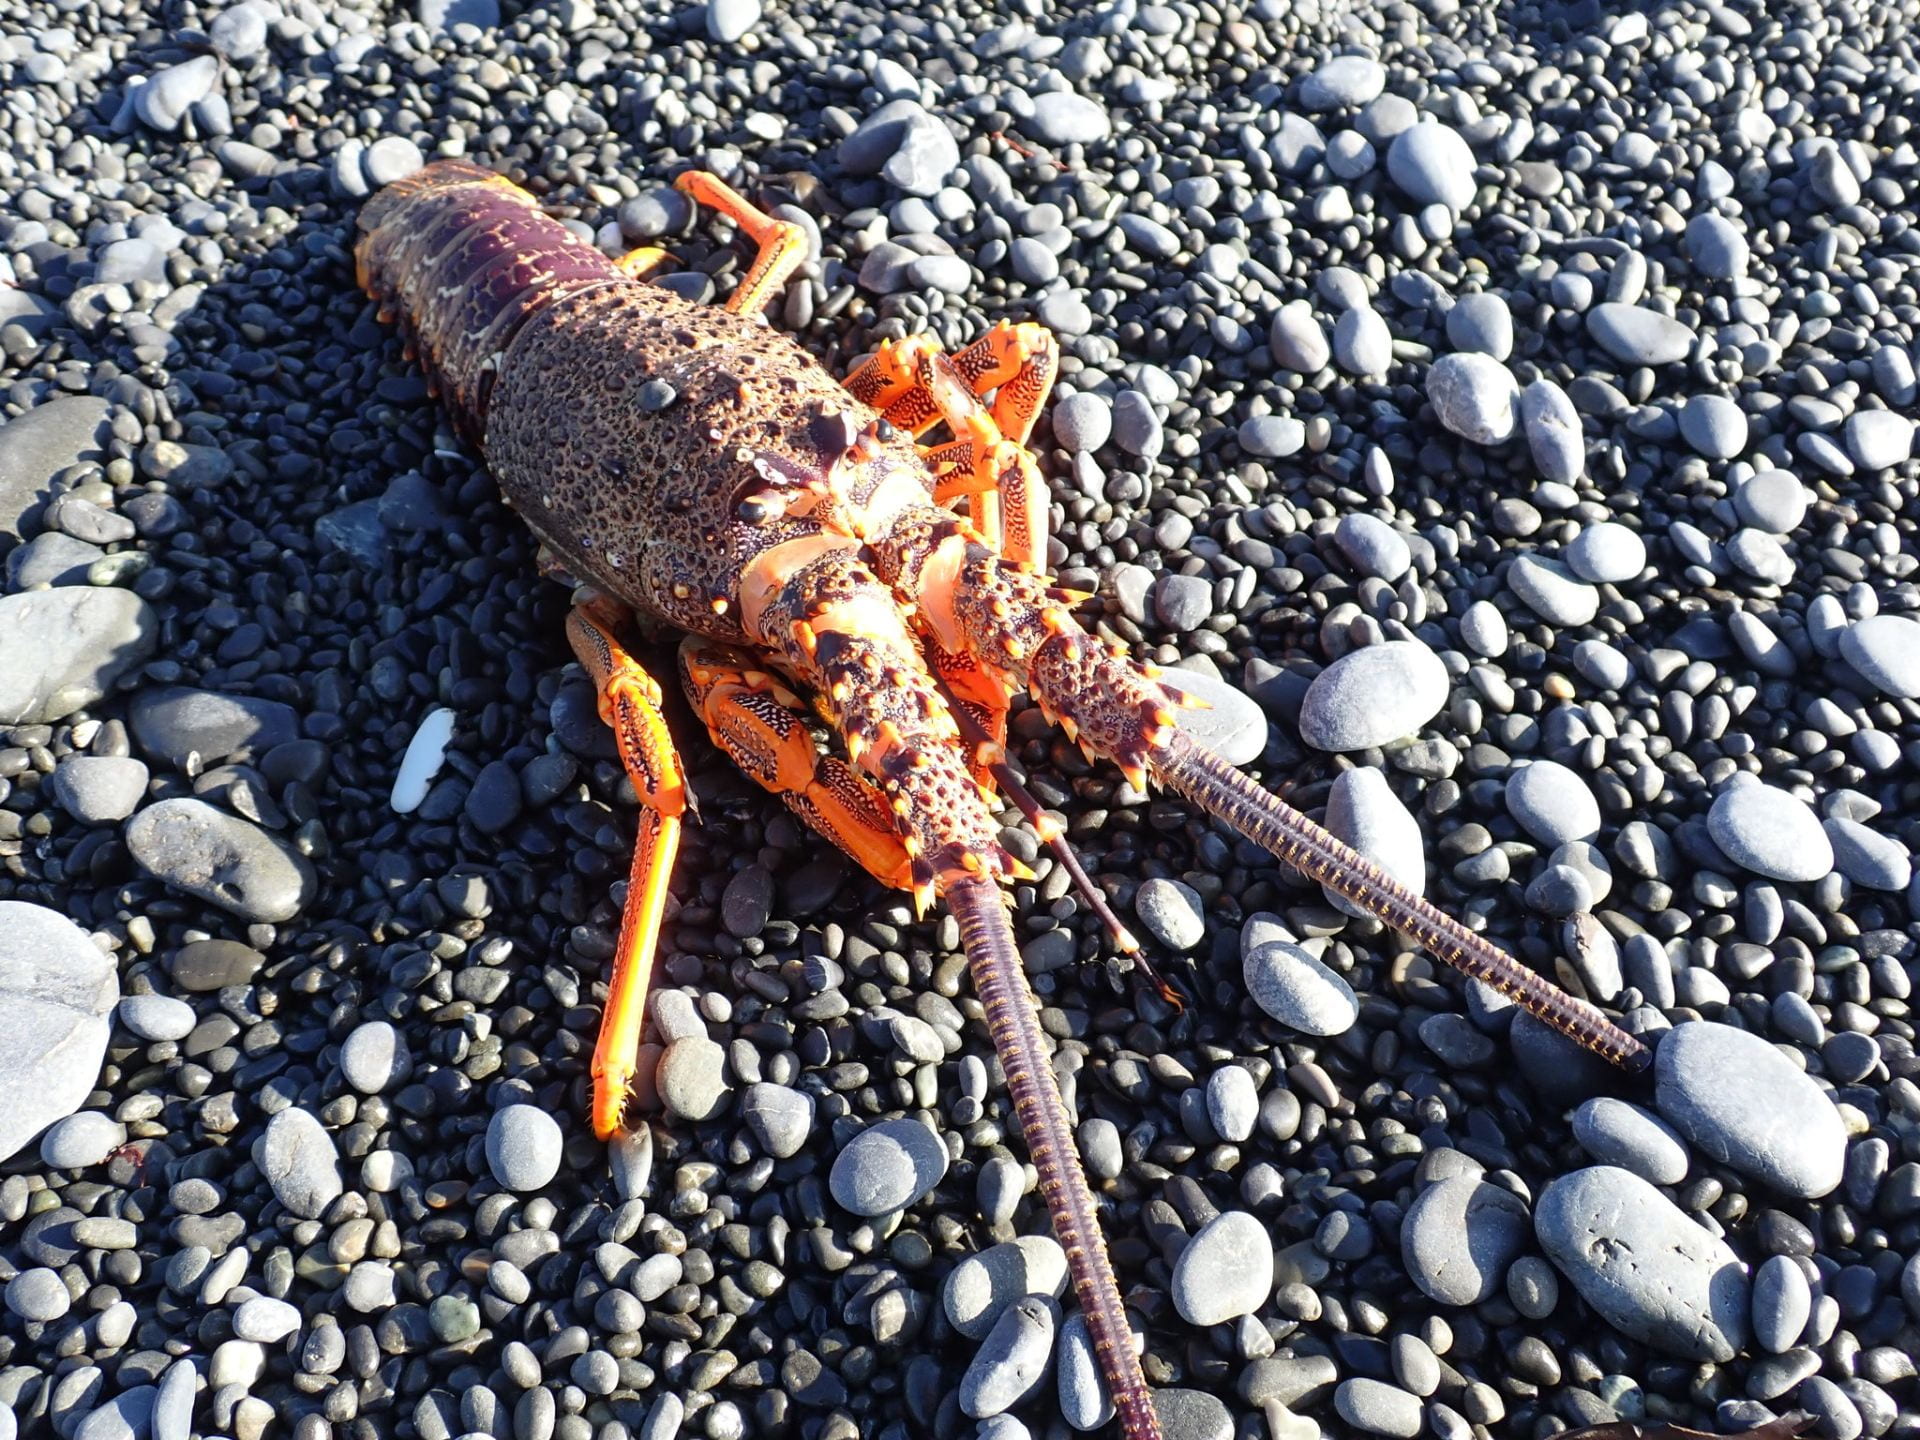 A crayfish on gravel.